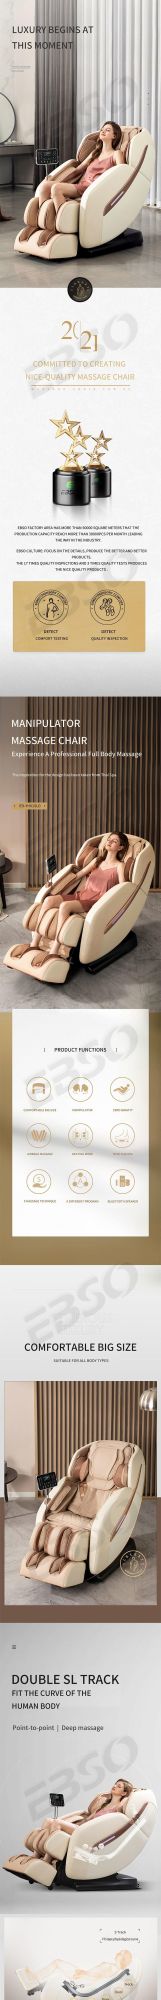 Hi-Speed Cheap Price High Effective Luxury Office Full Body Massage Chair